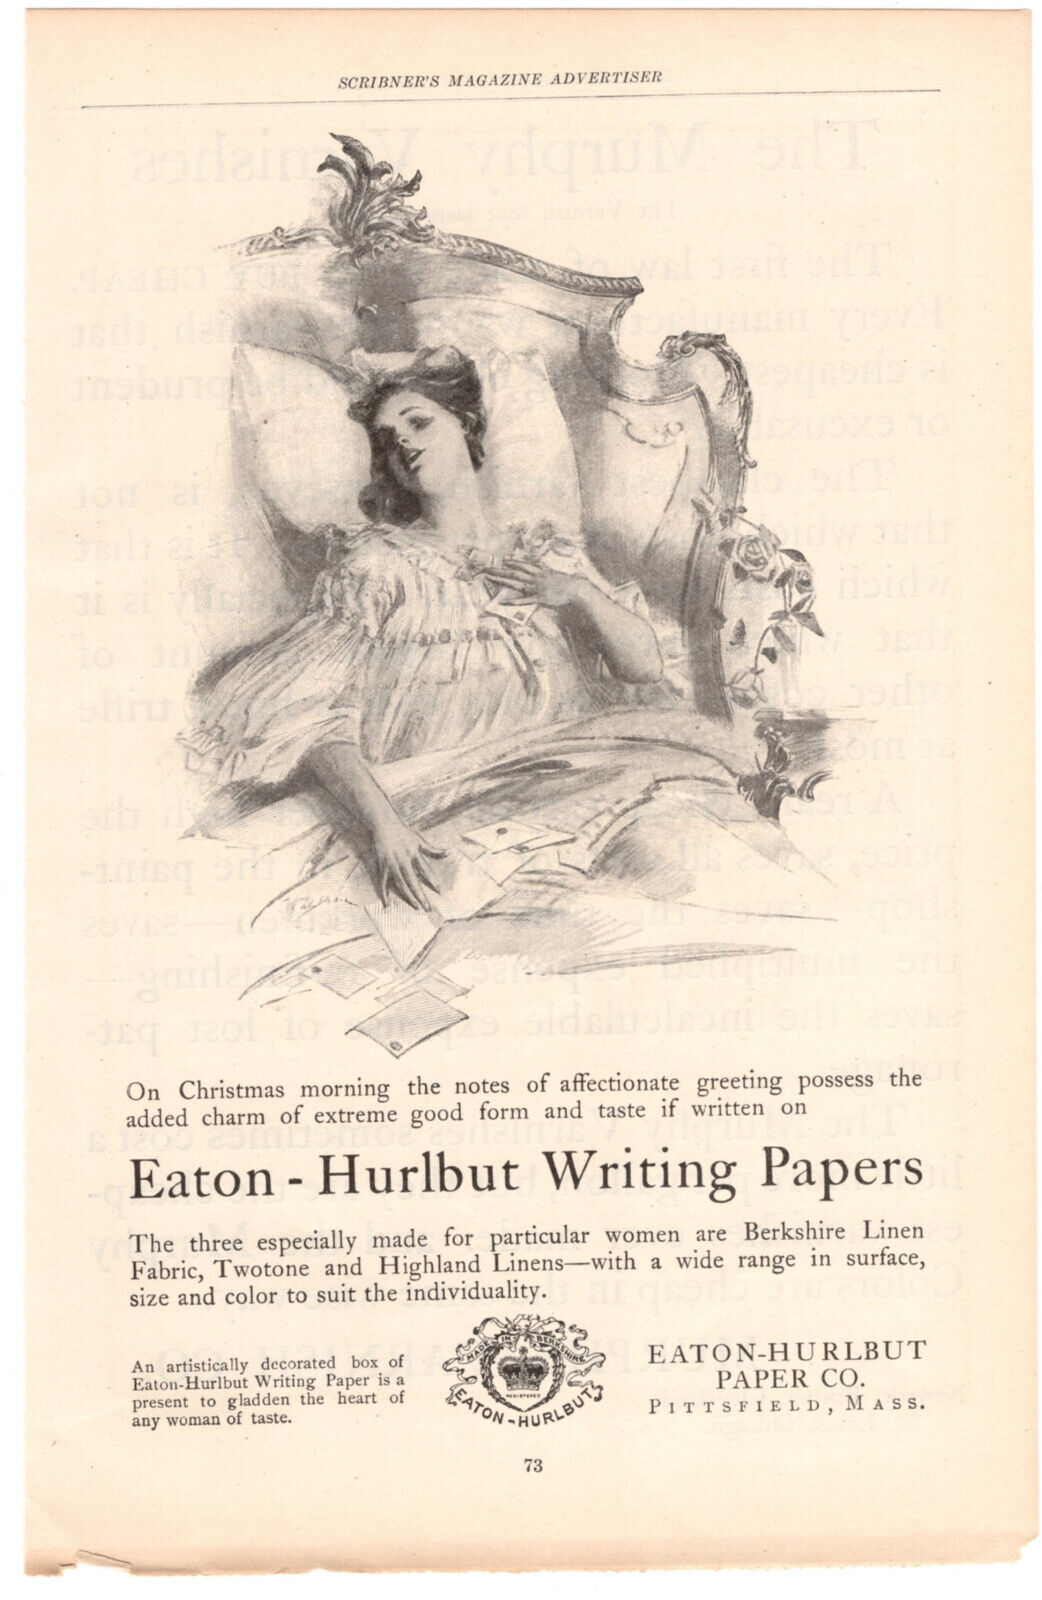 Eaton-Hurlbut Writing Papers Pittsfield Mass 1905 Vintage Print Ad Original